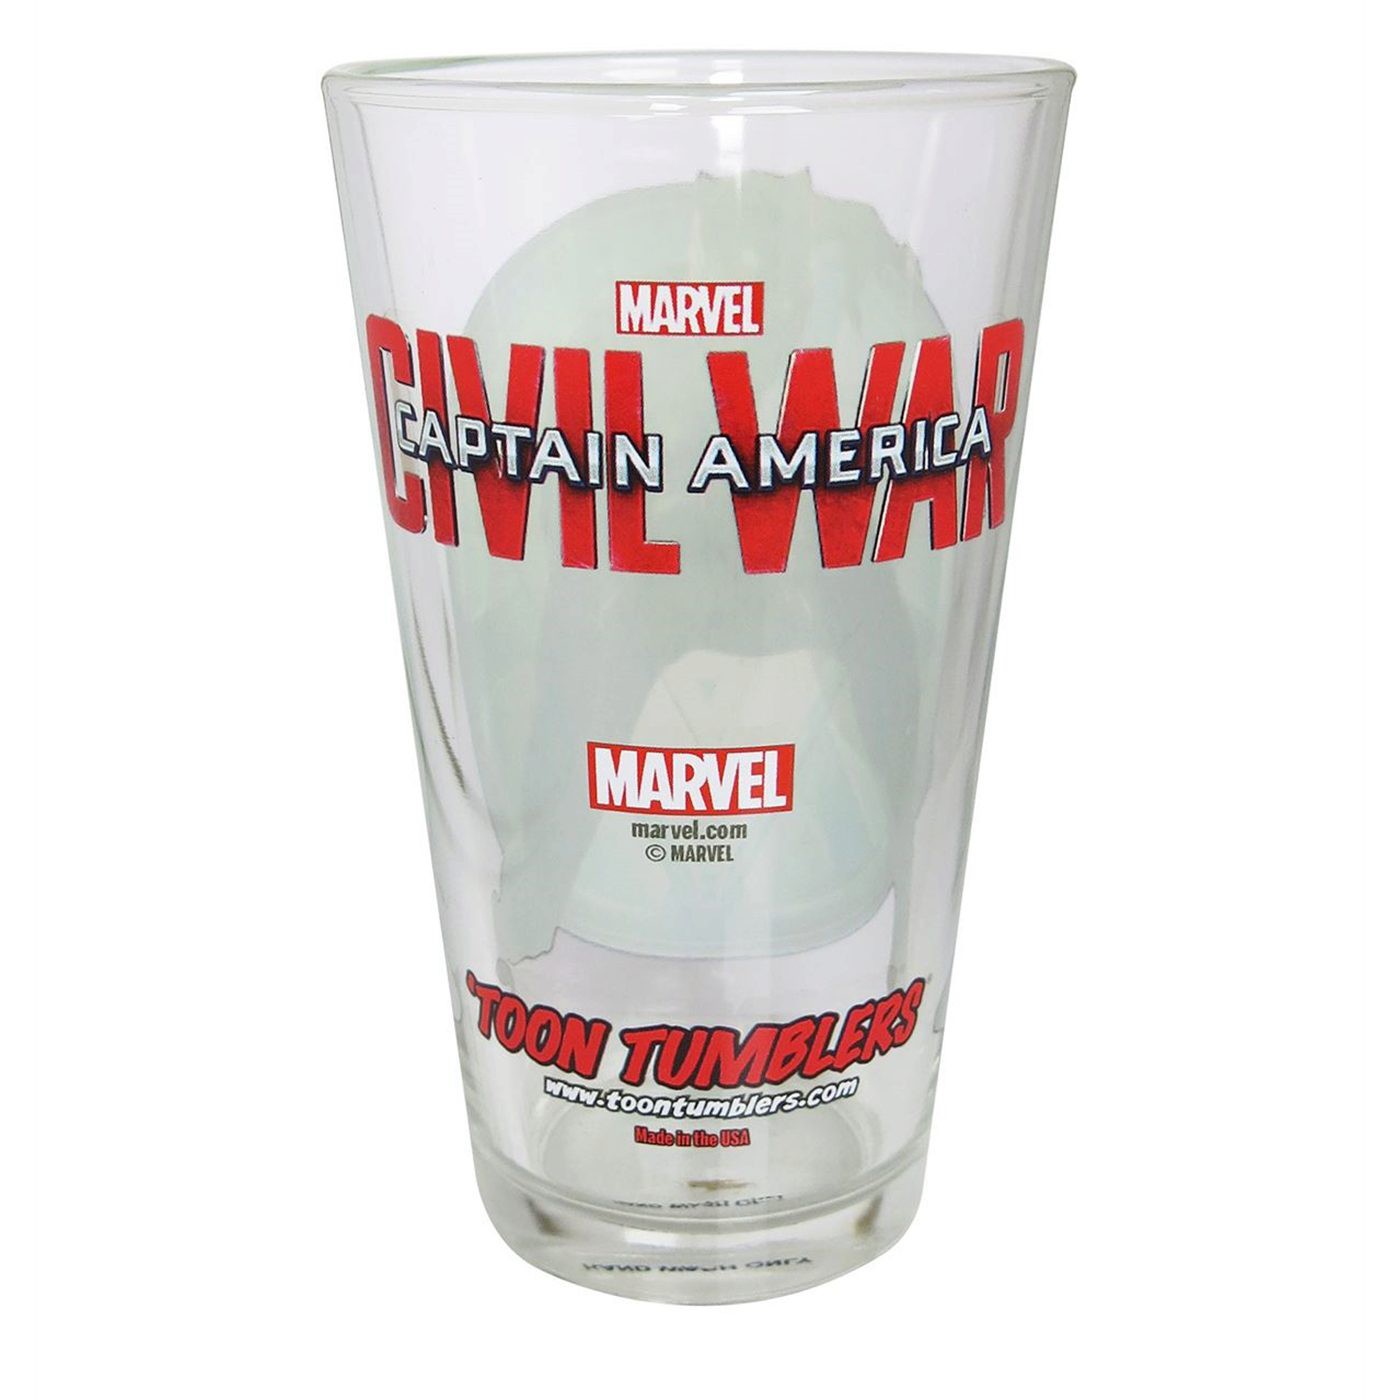 Black Panther Civil War Pint Glass